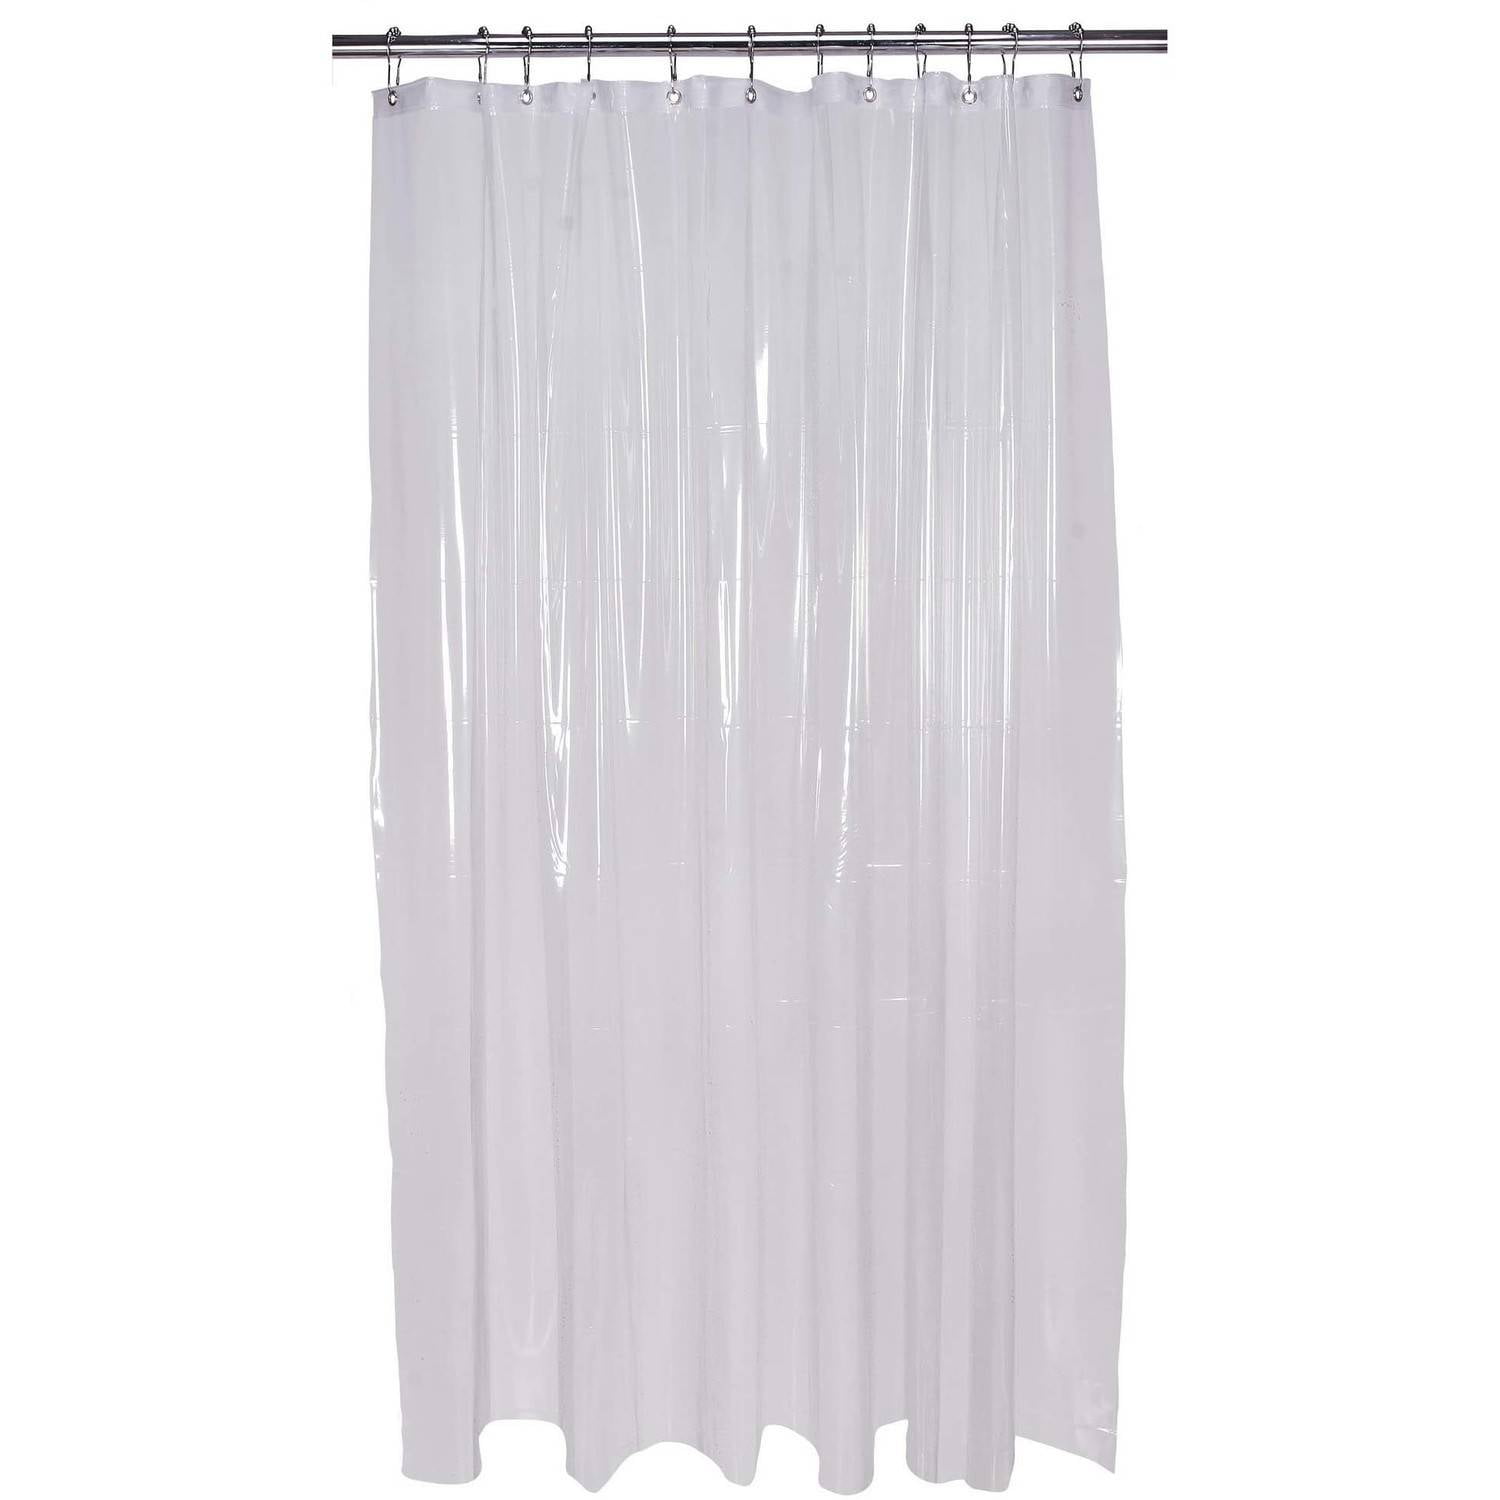 Bath Bliss Extra Long Shower Curtain, 76 Inch Long Shower Curtain